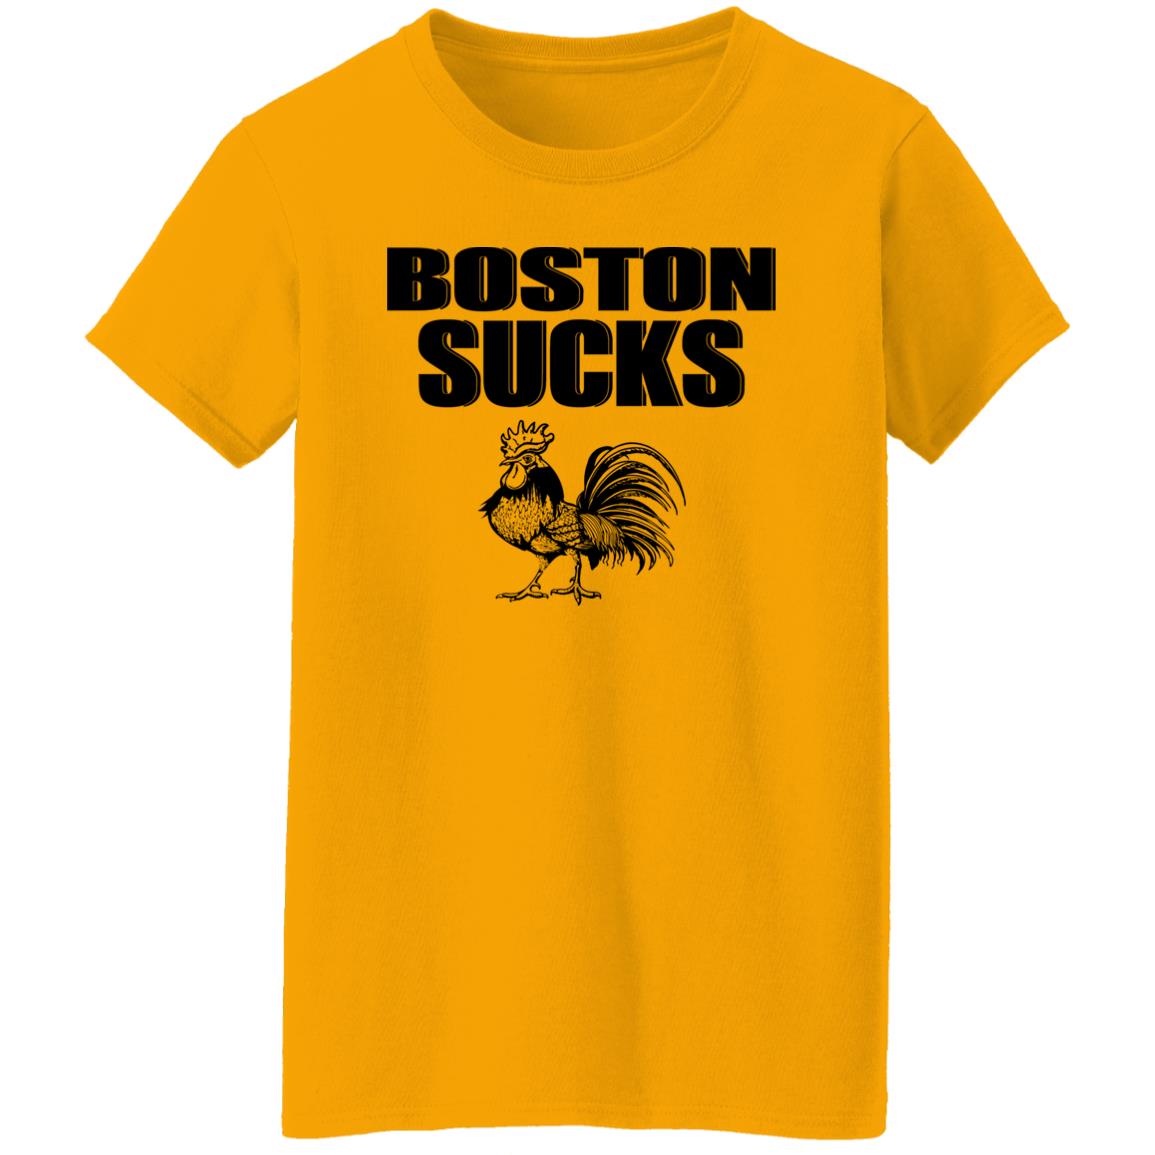 Draymond Boston Sucks Shirt Warriors on NBCS